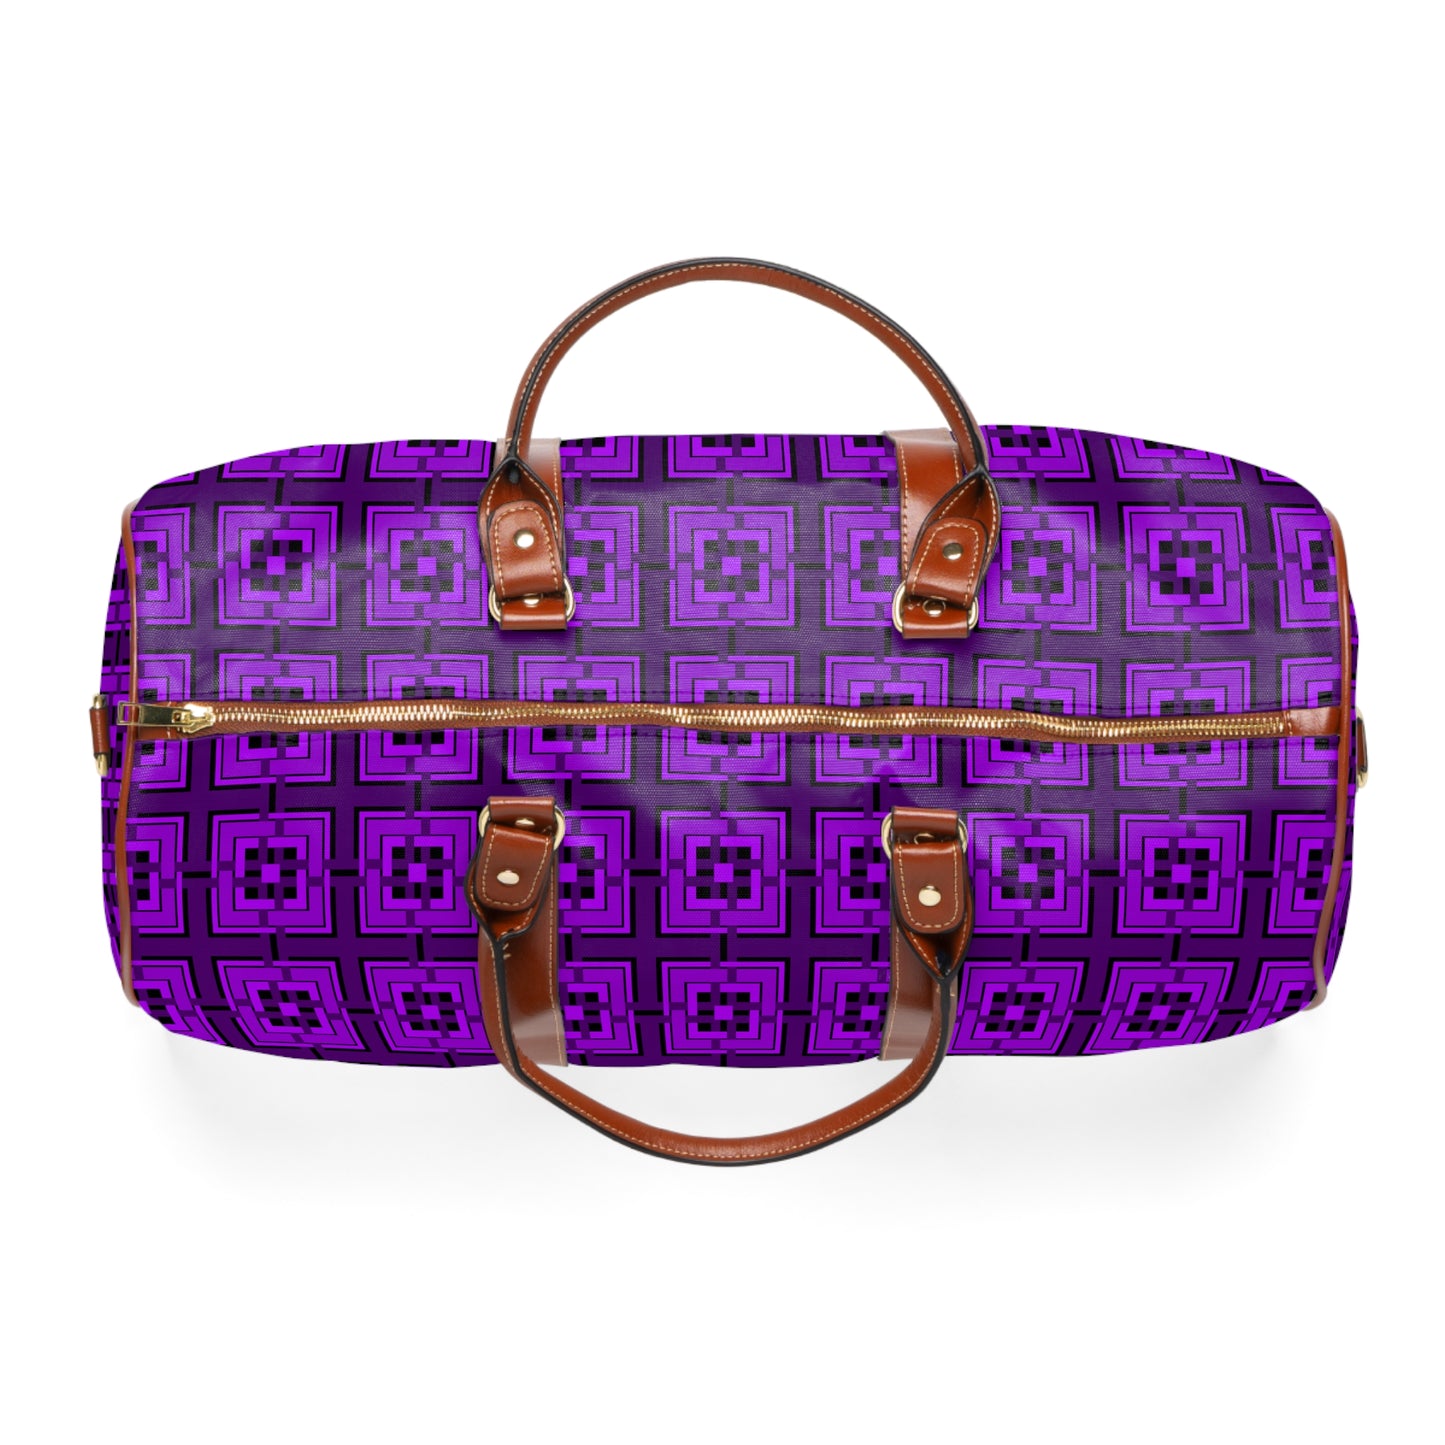 Intersecting Squares - Purple - Black 000000 - Waterproof Travel Bag